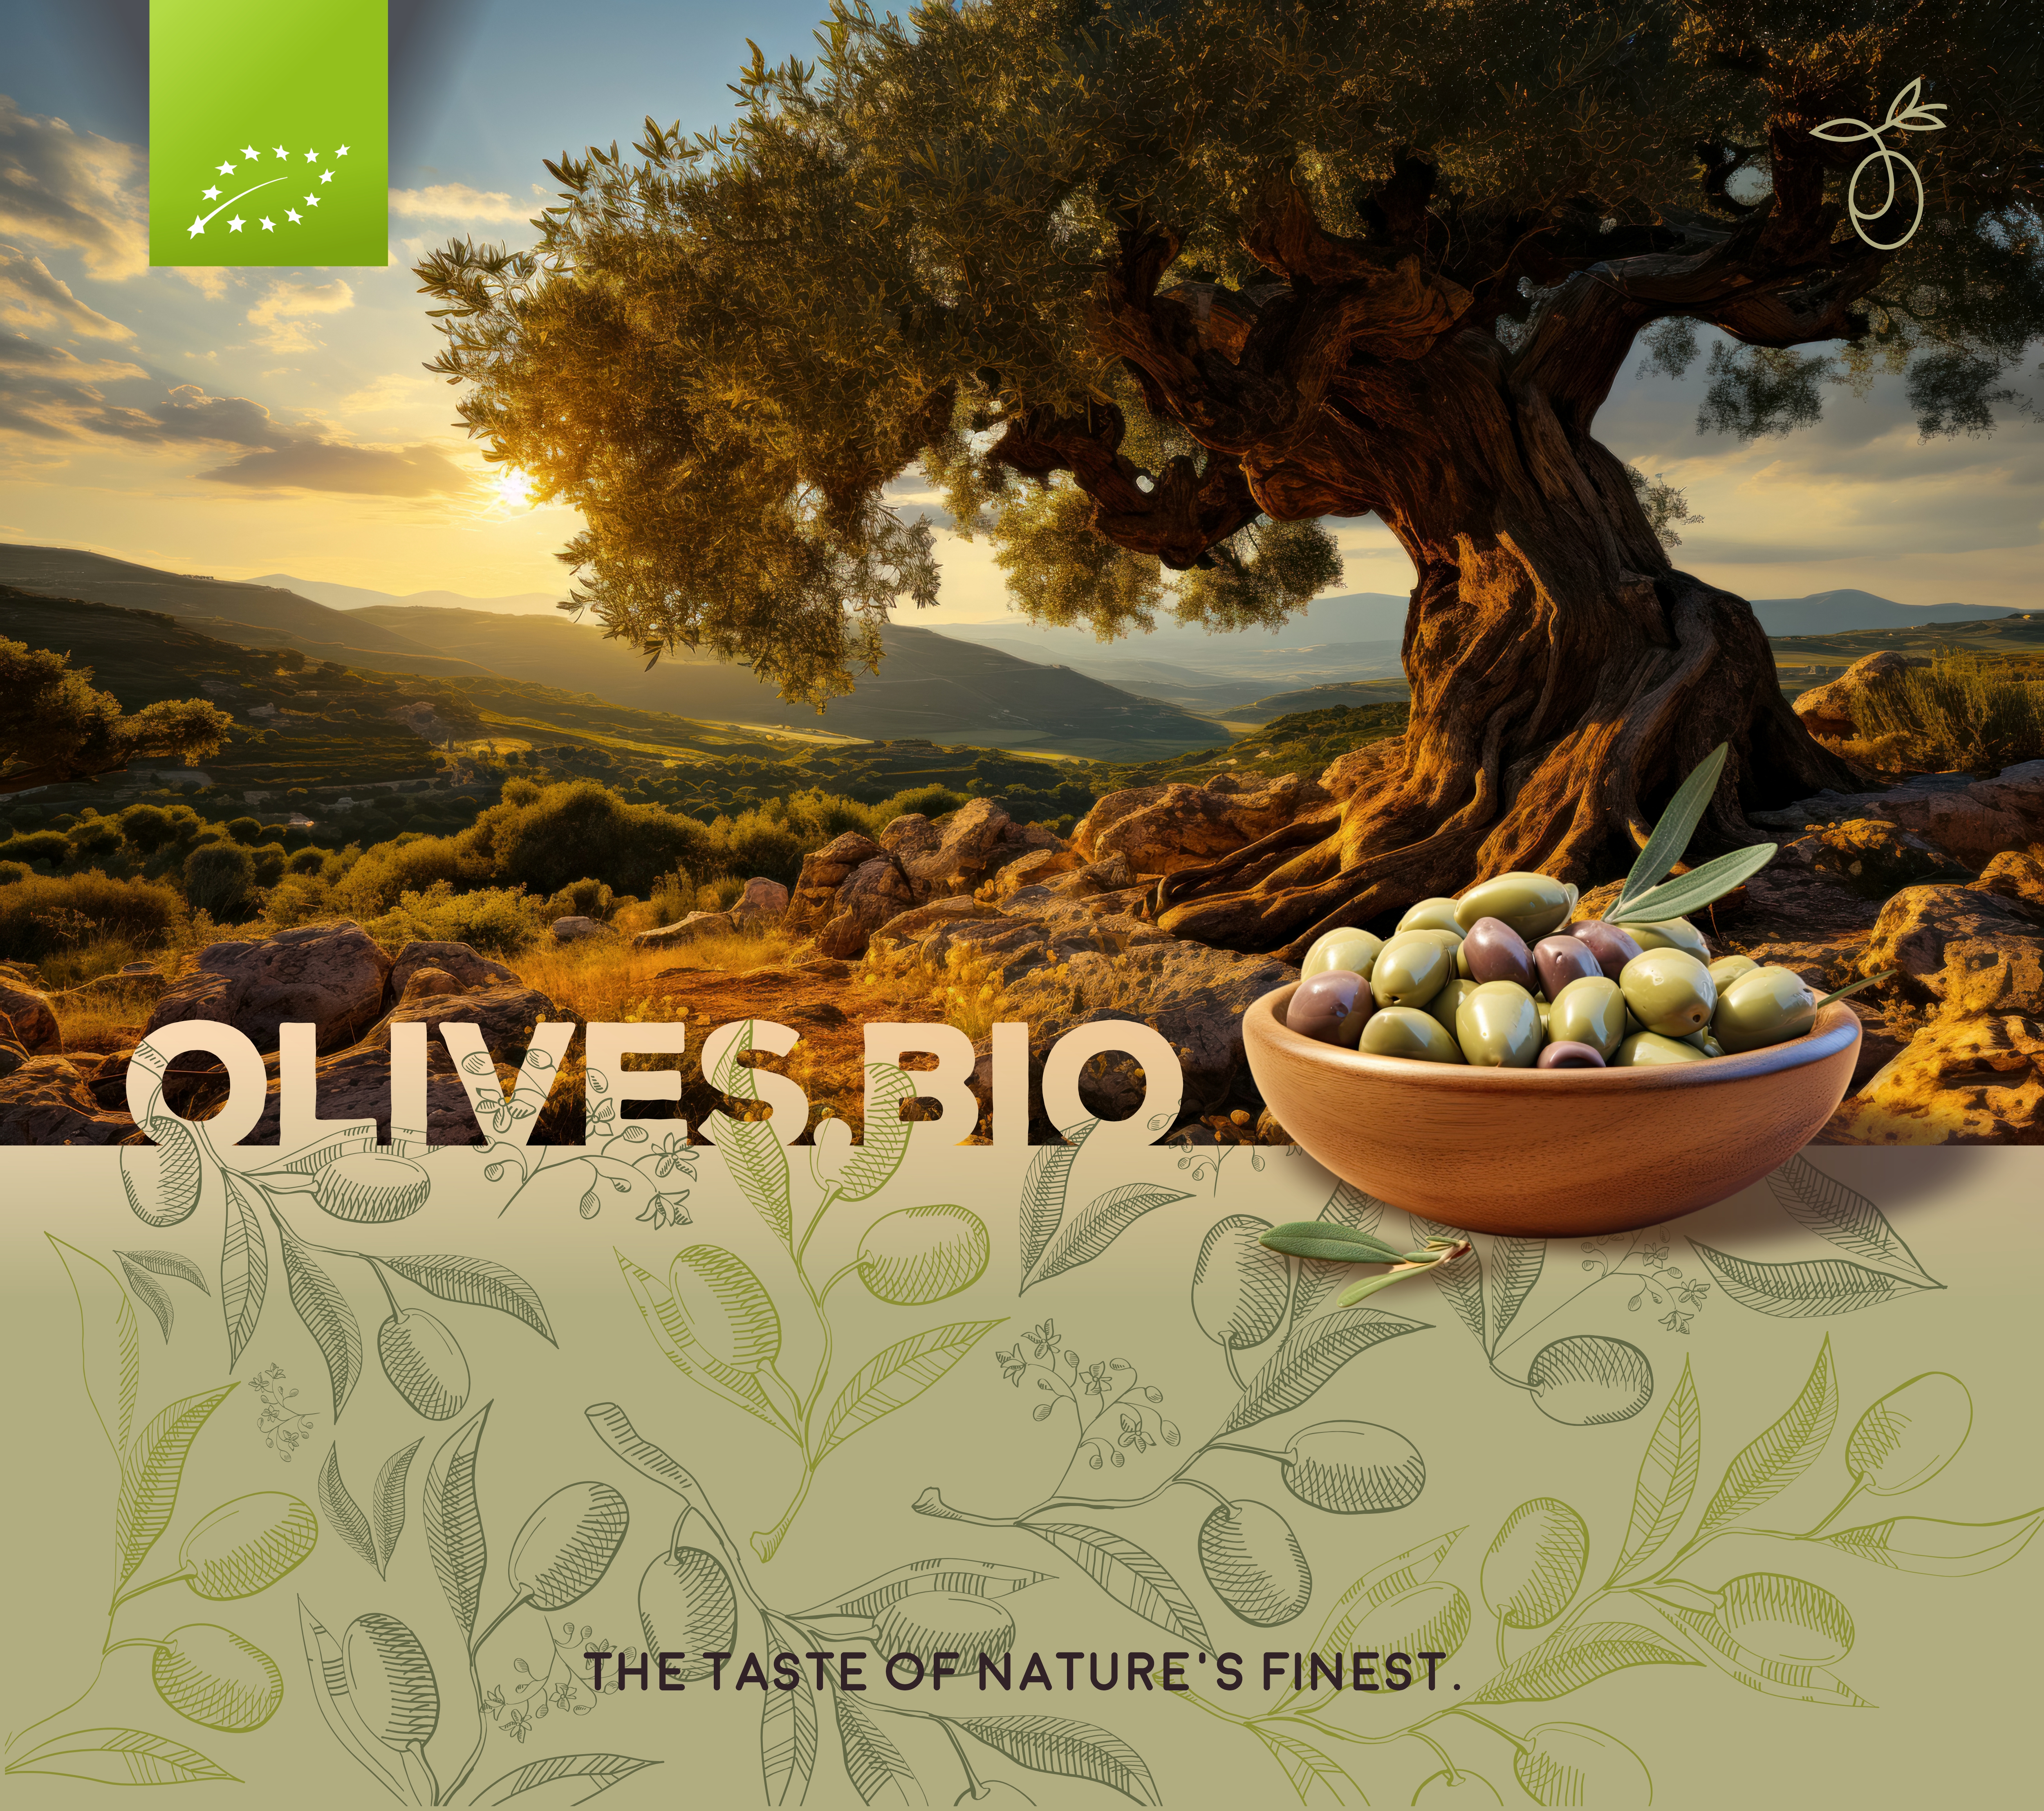 Olives.Bio